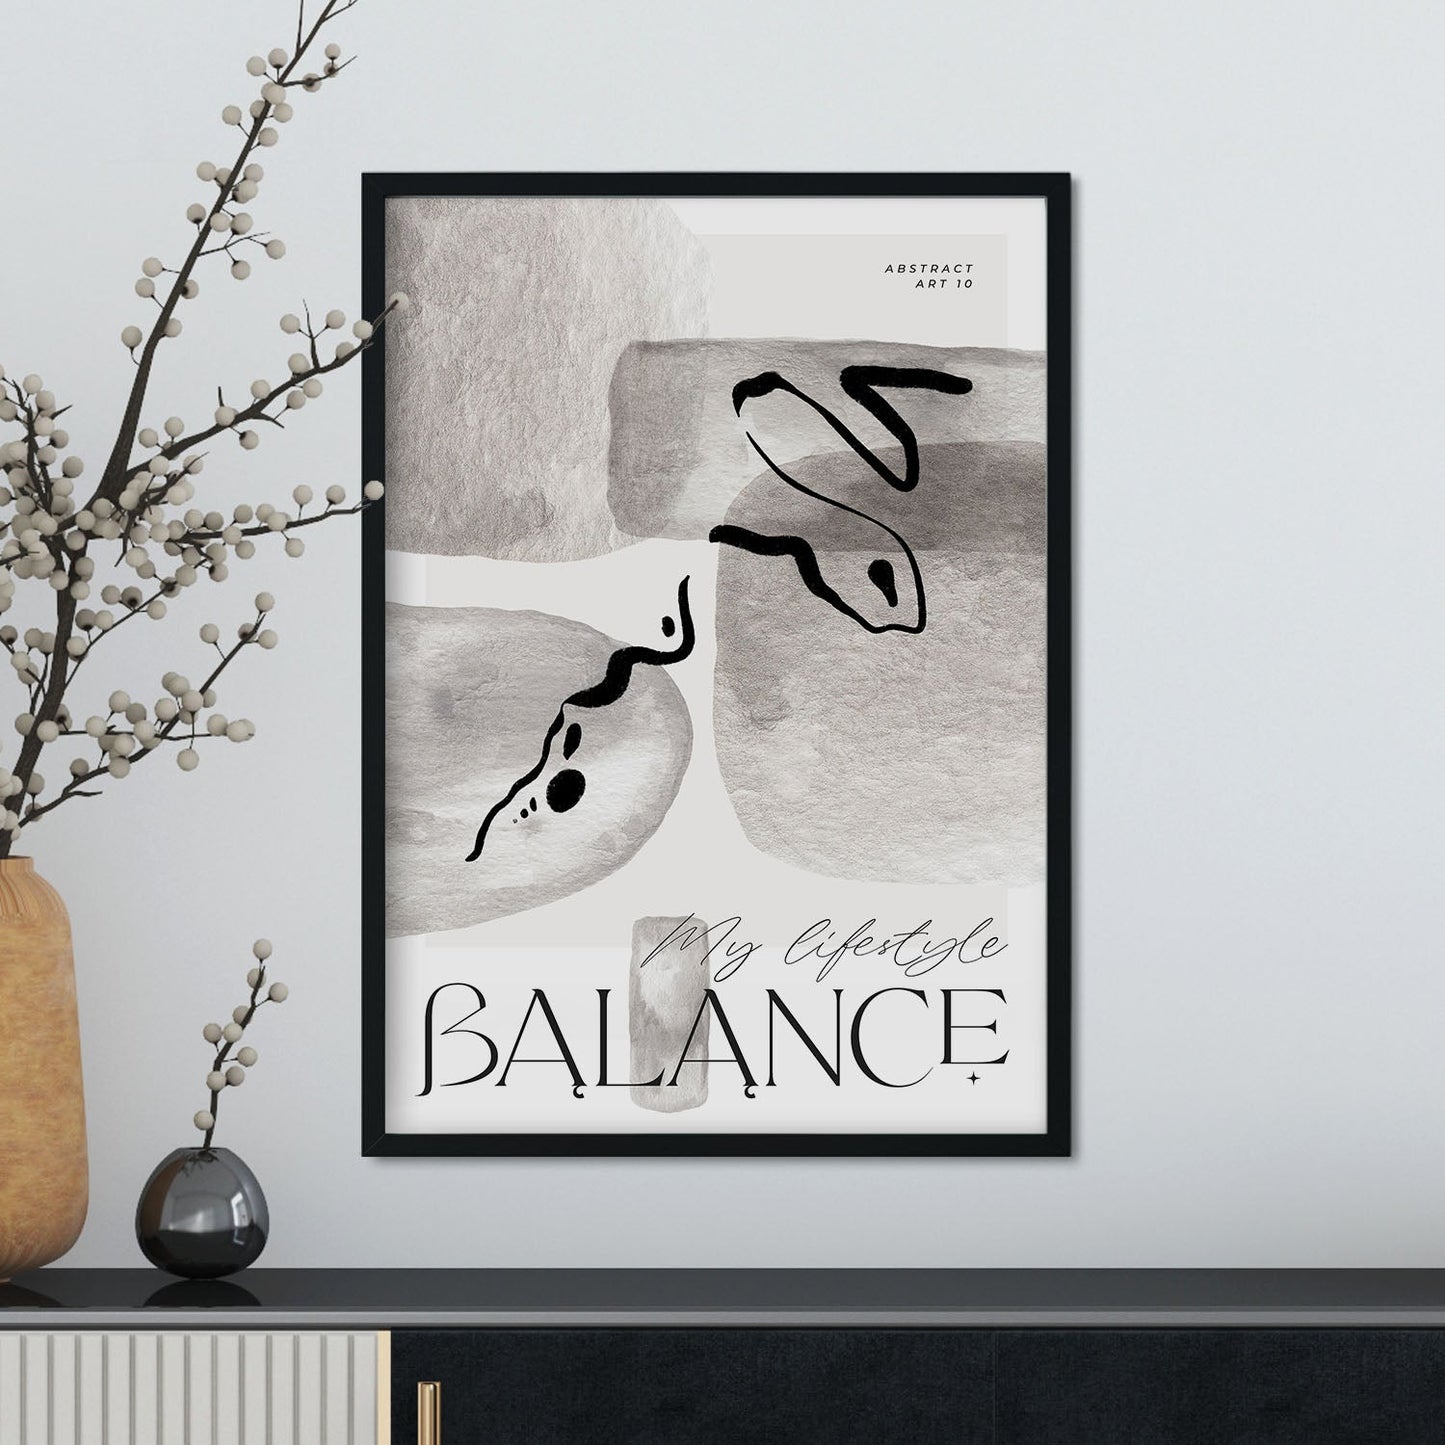 Balancer-Artwork-Nacnic-Nacnic Estudio SL